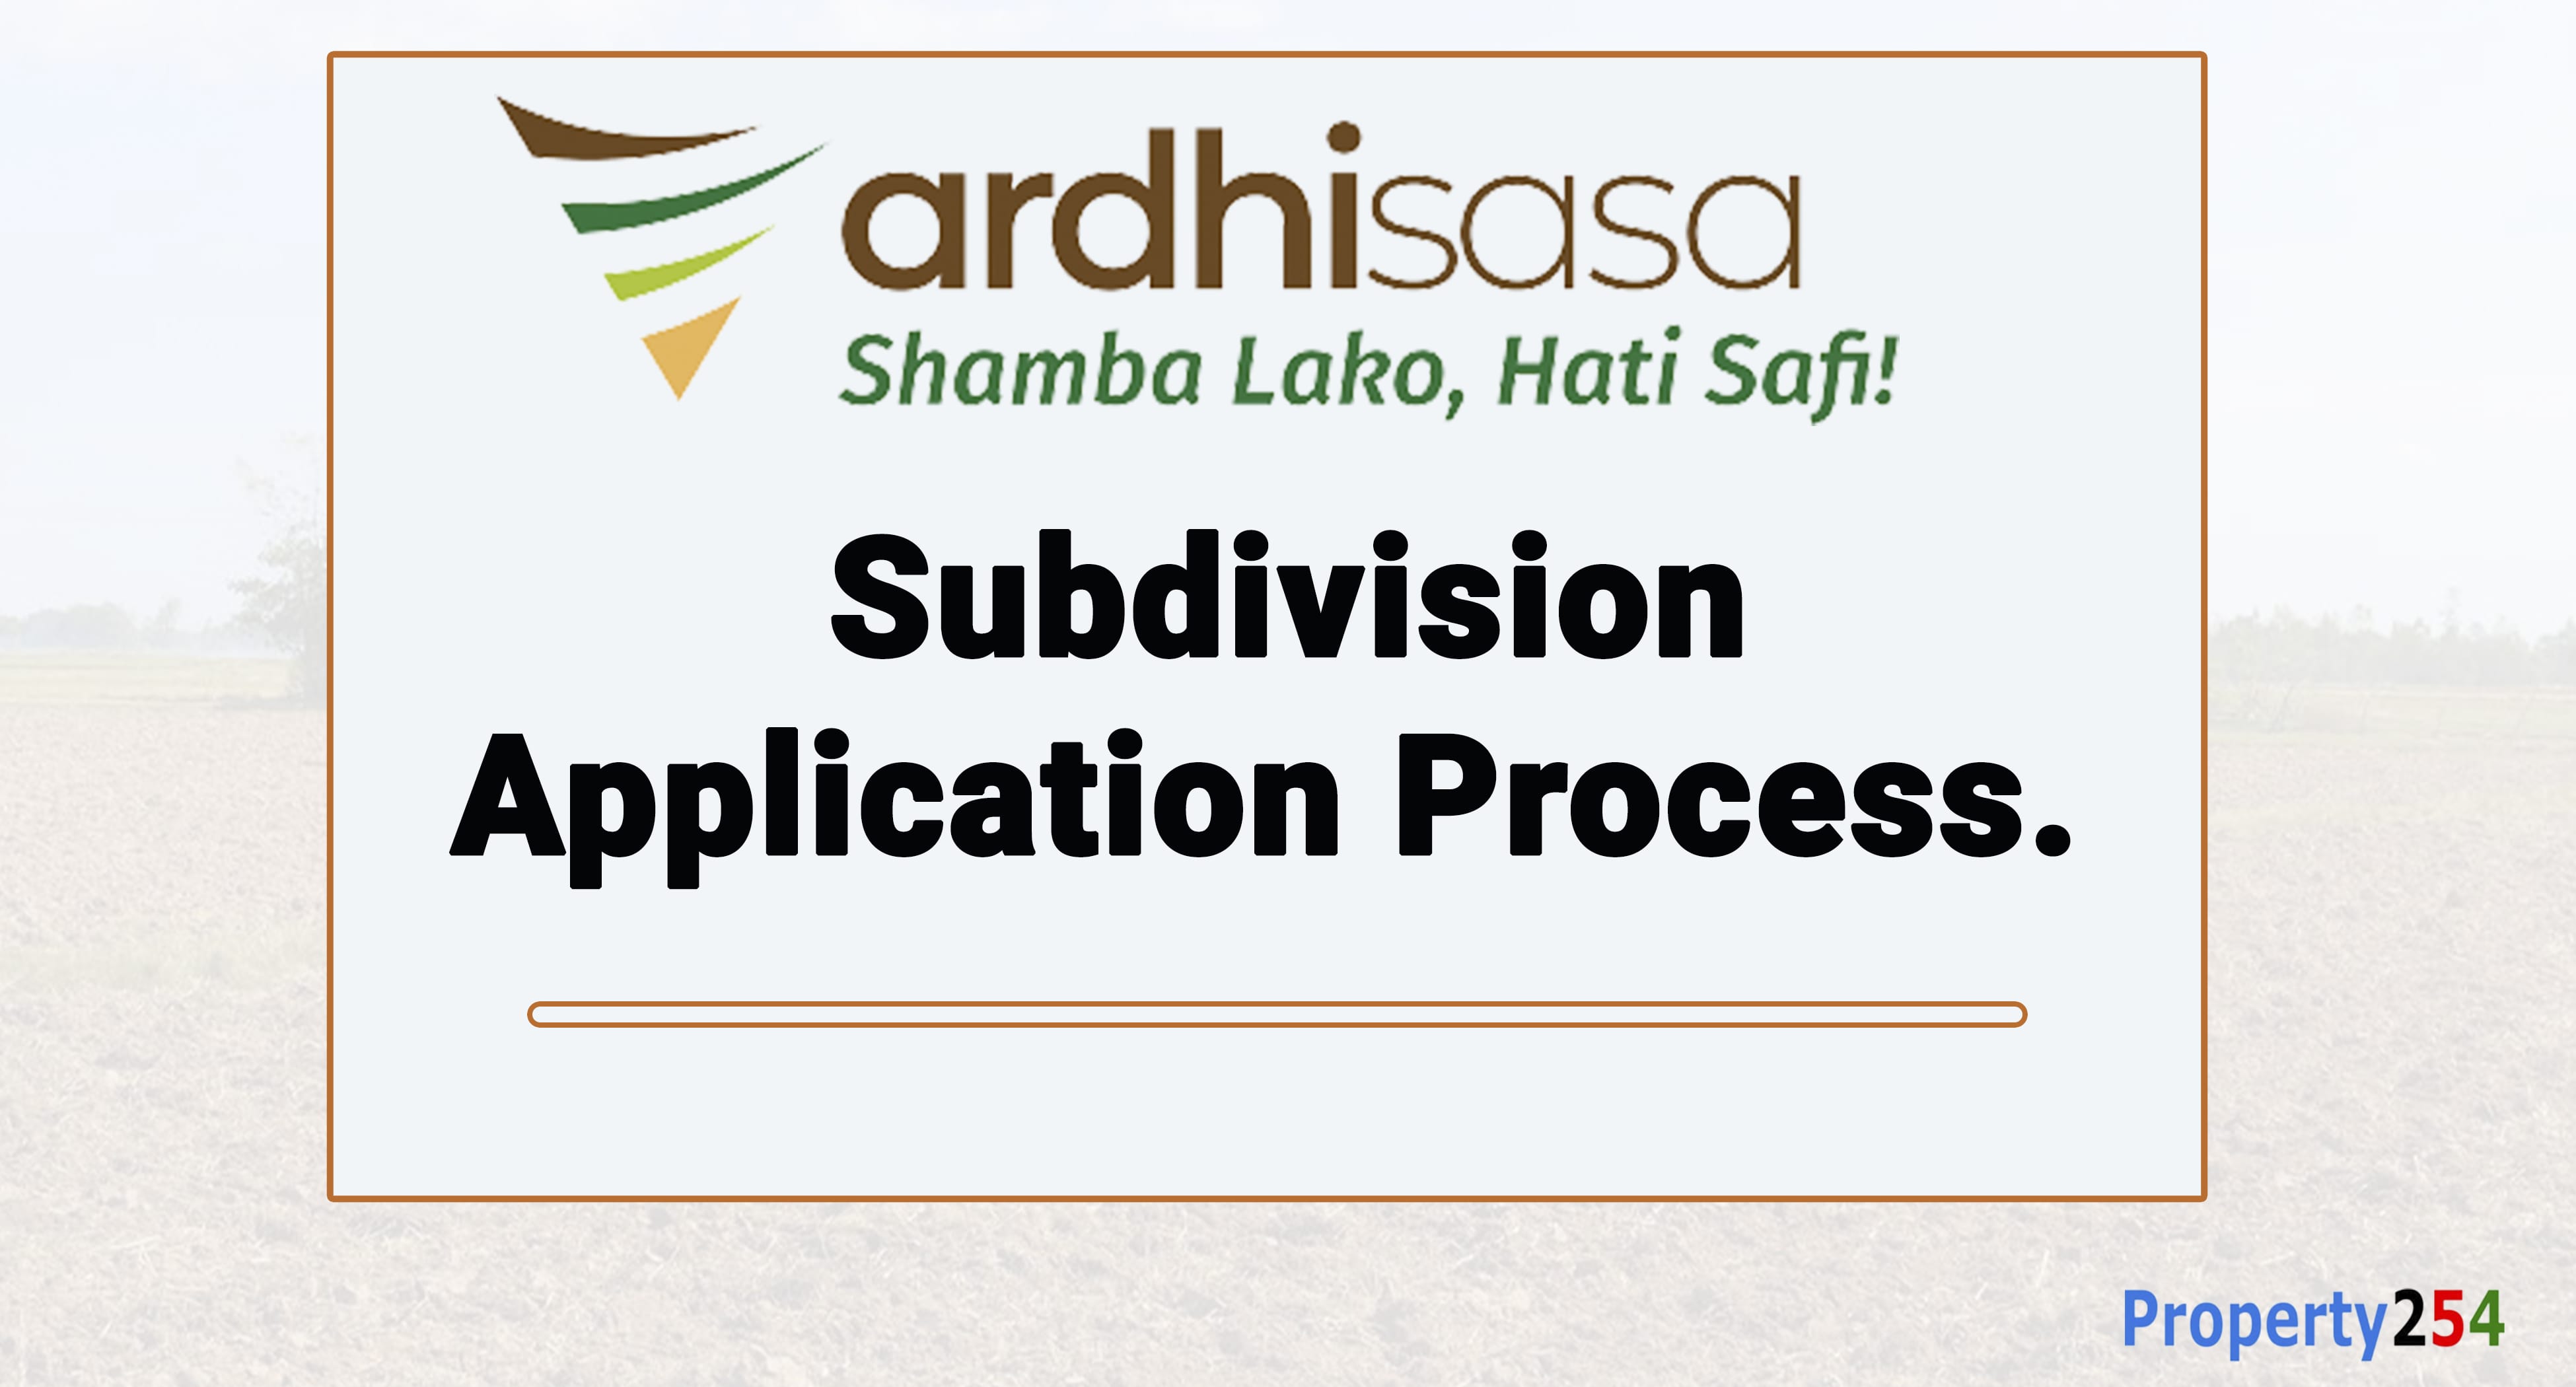 How to Make Subdivision Application on Ardhisasa thumbnail